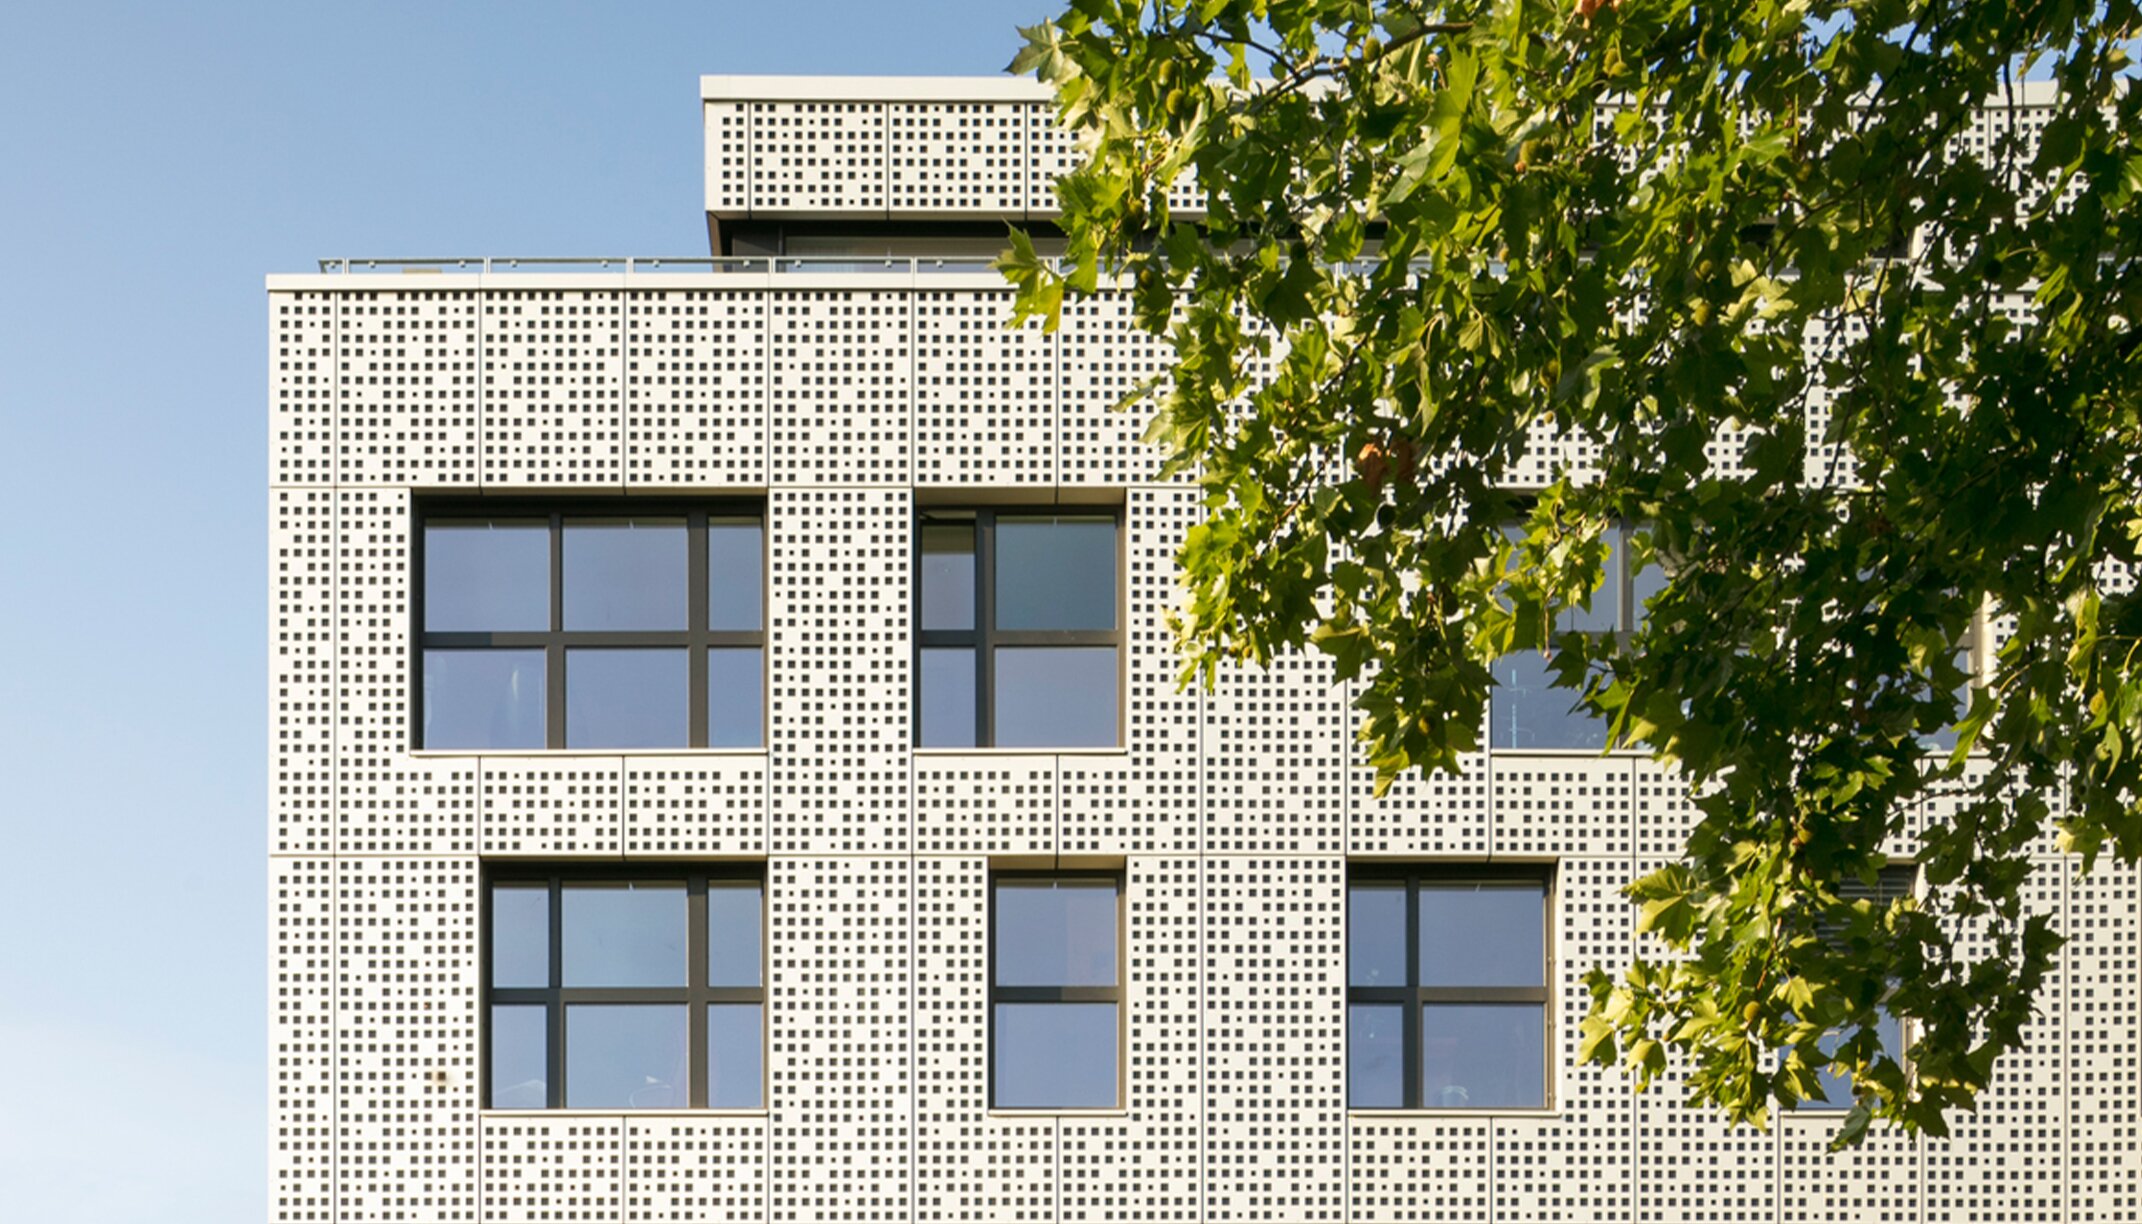 detail view: metal facade "Magnus 31", POHL Europanel | © Constantin Meyer